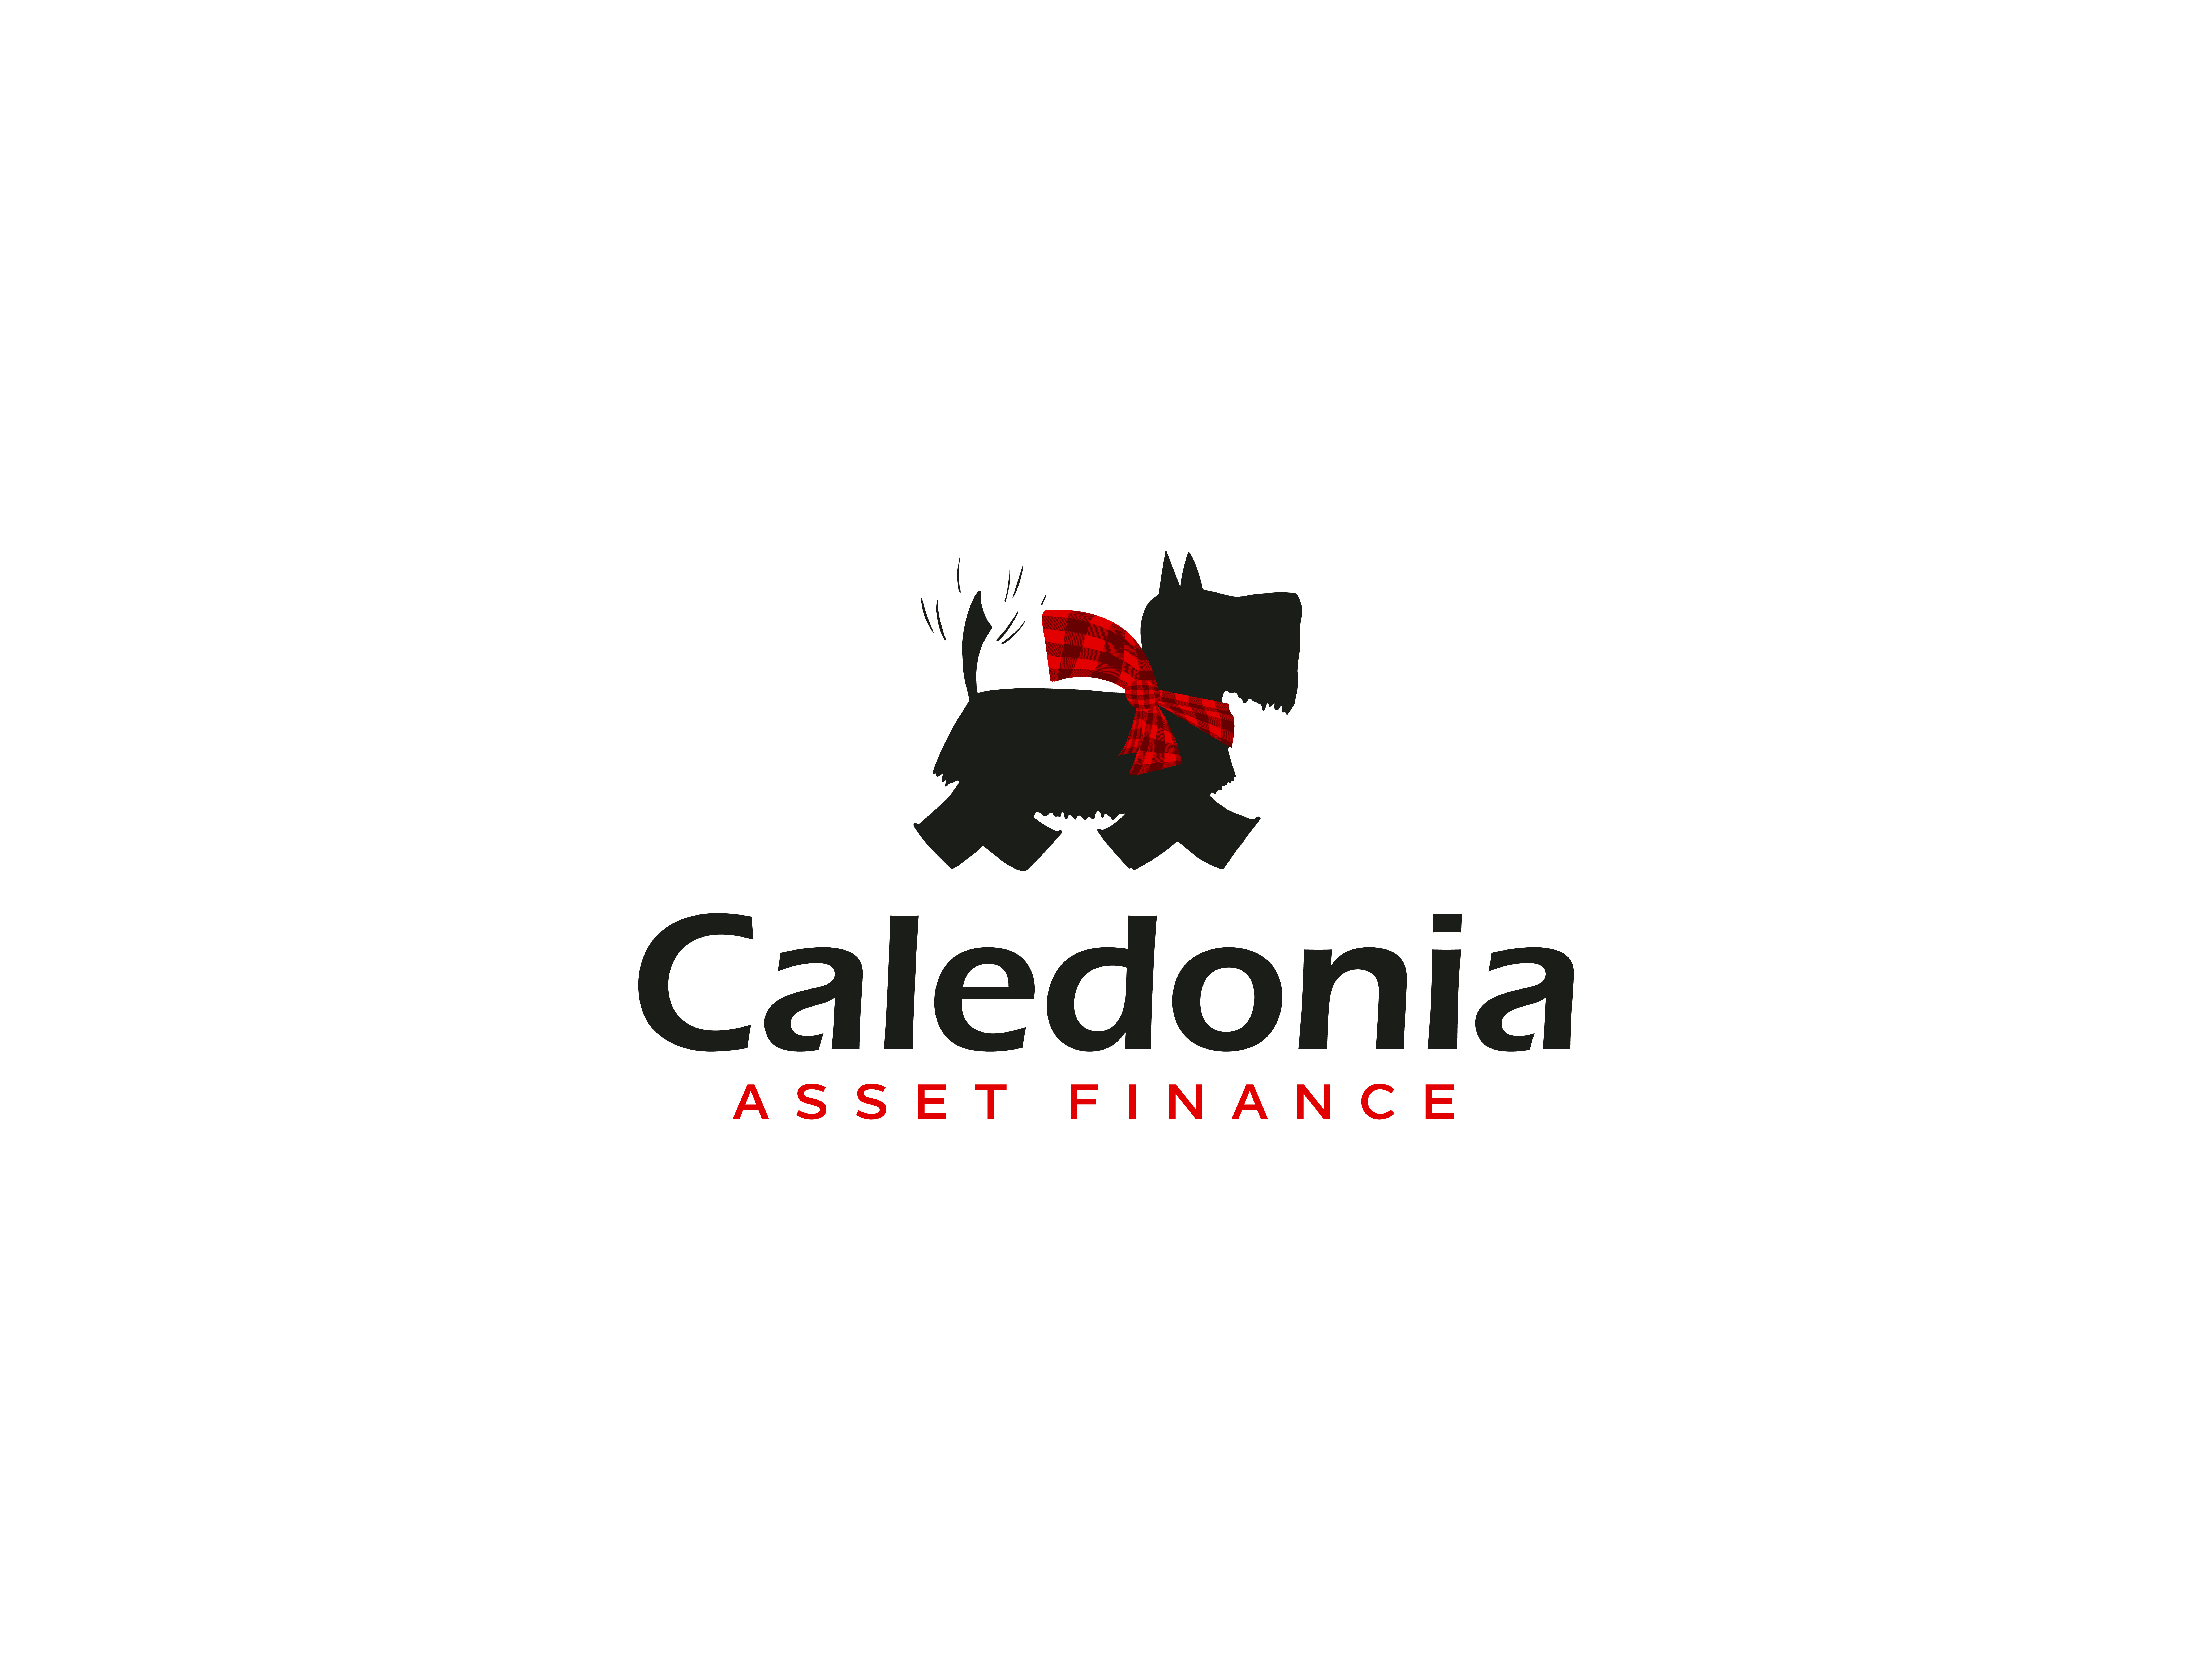 Caledonia Asset Finance Ltd